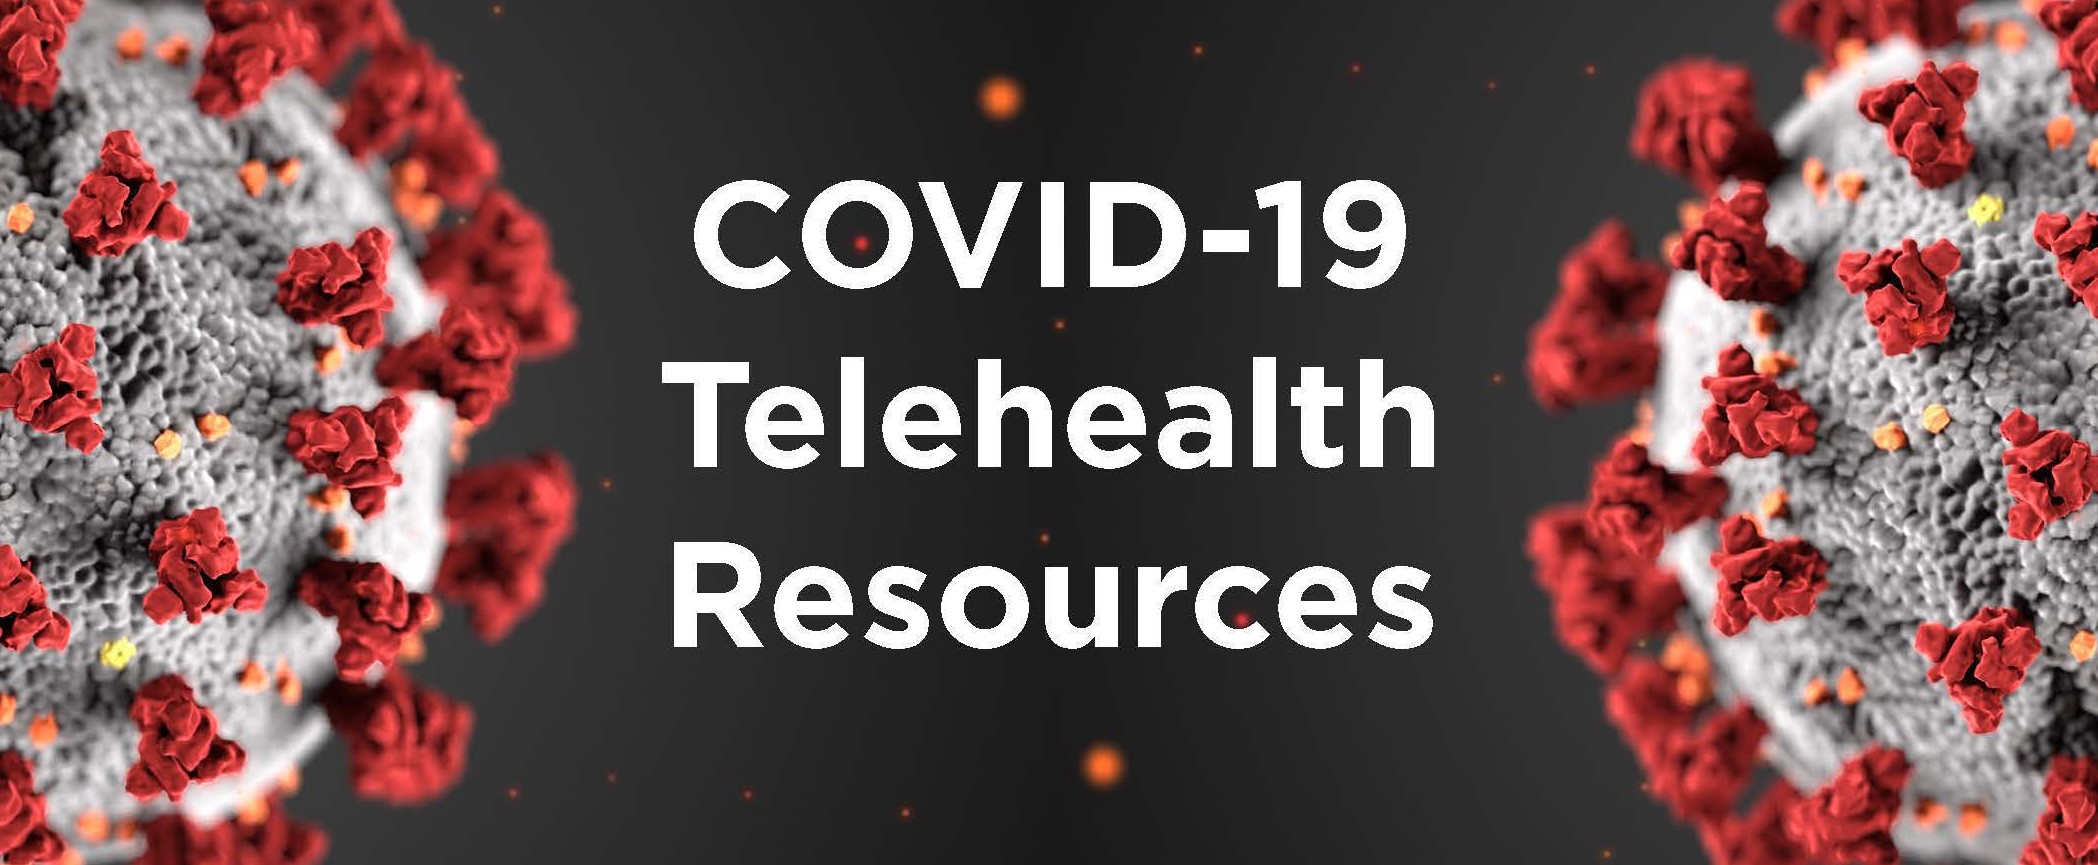 COVID-19 Telehealth Resources